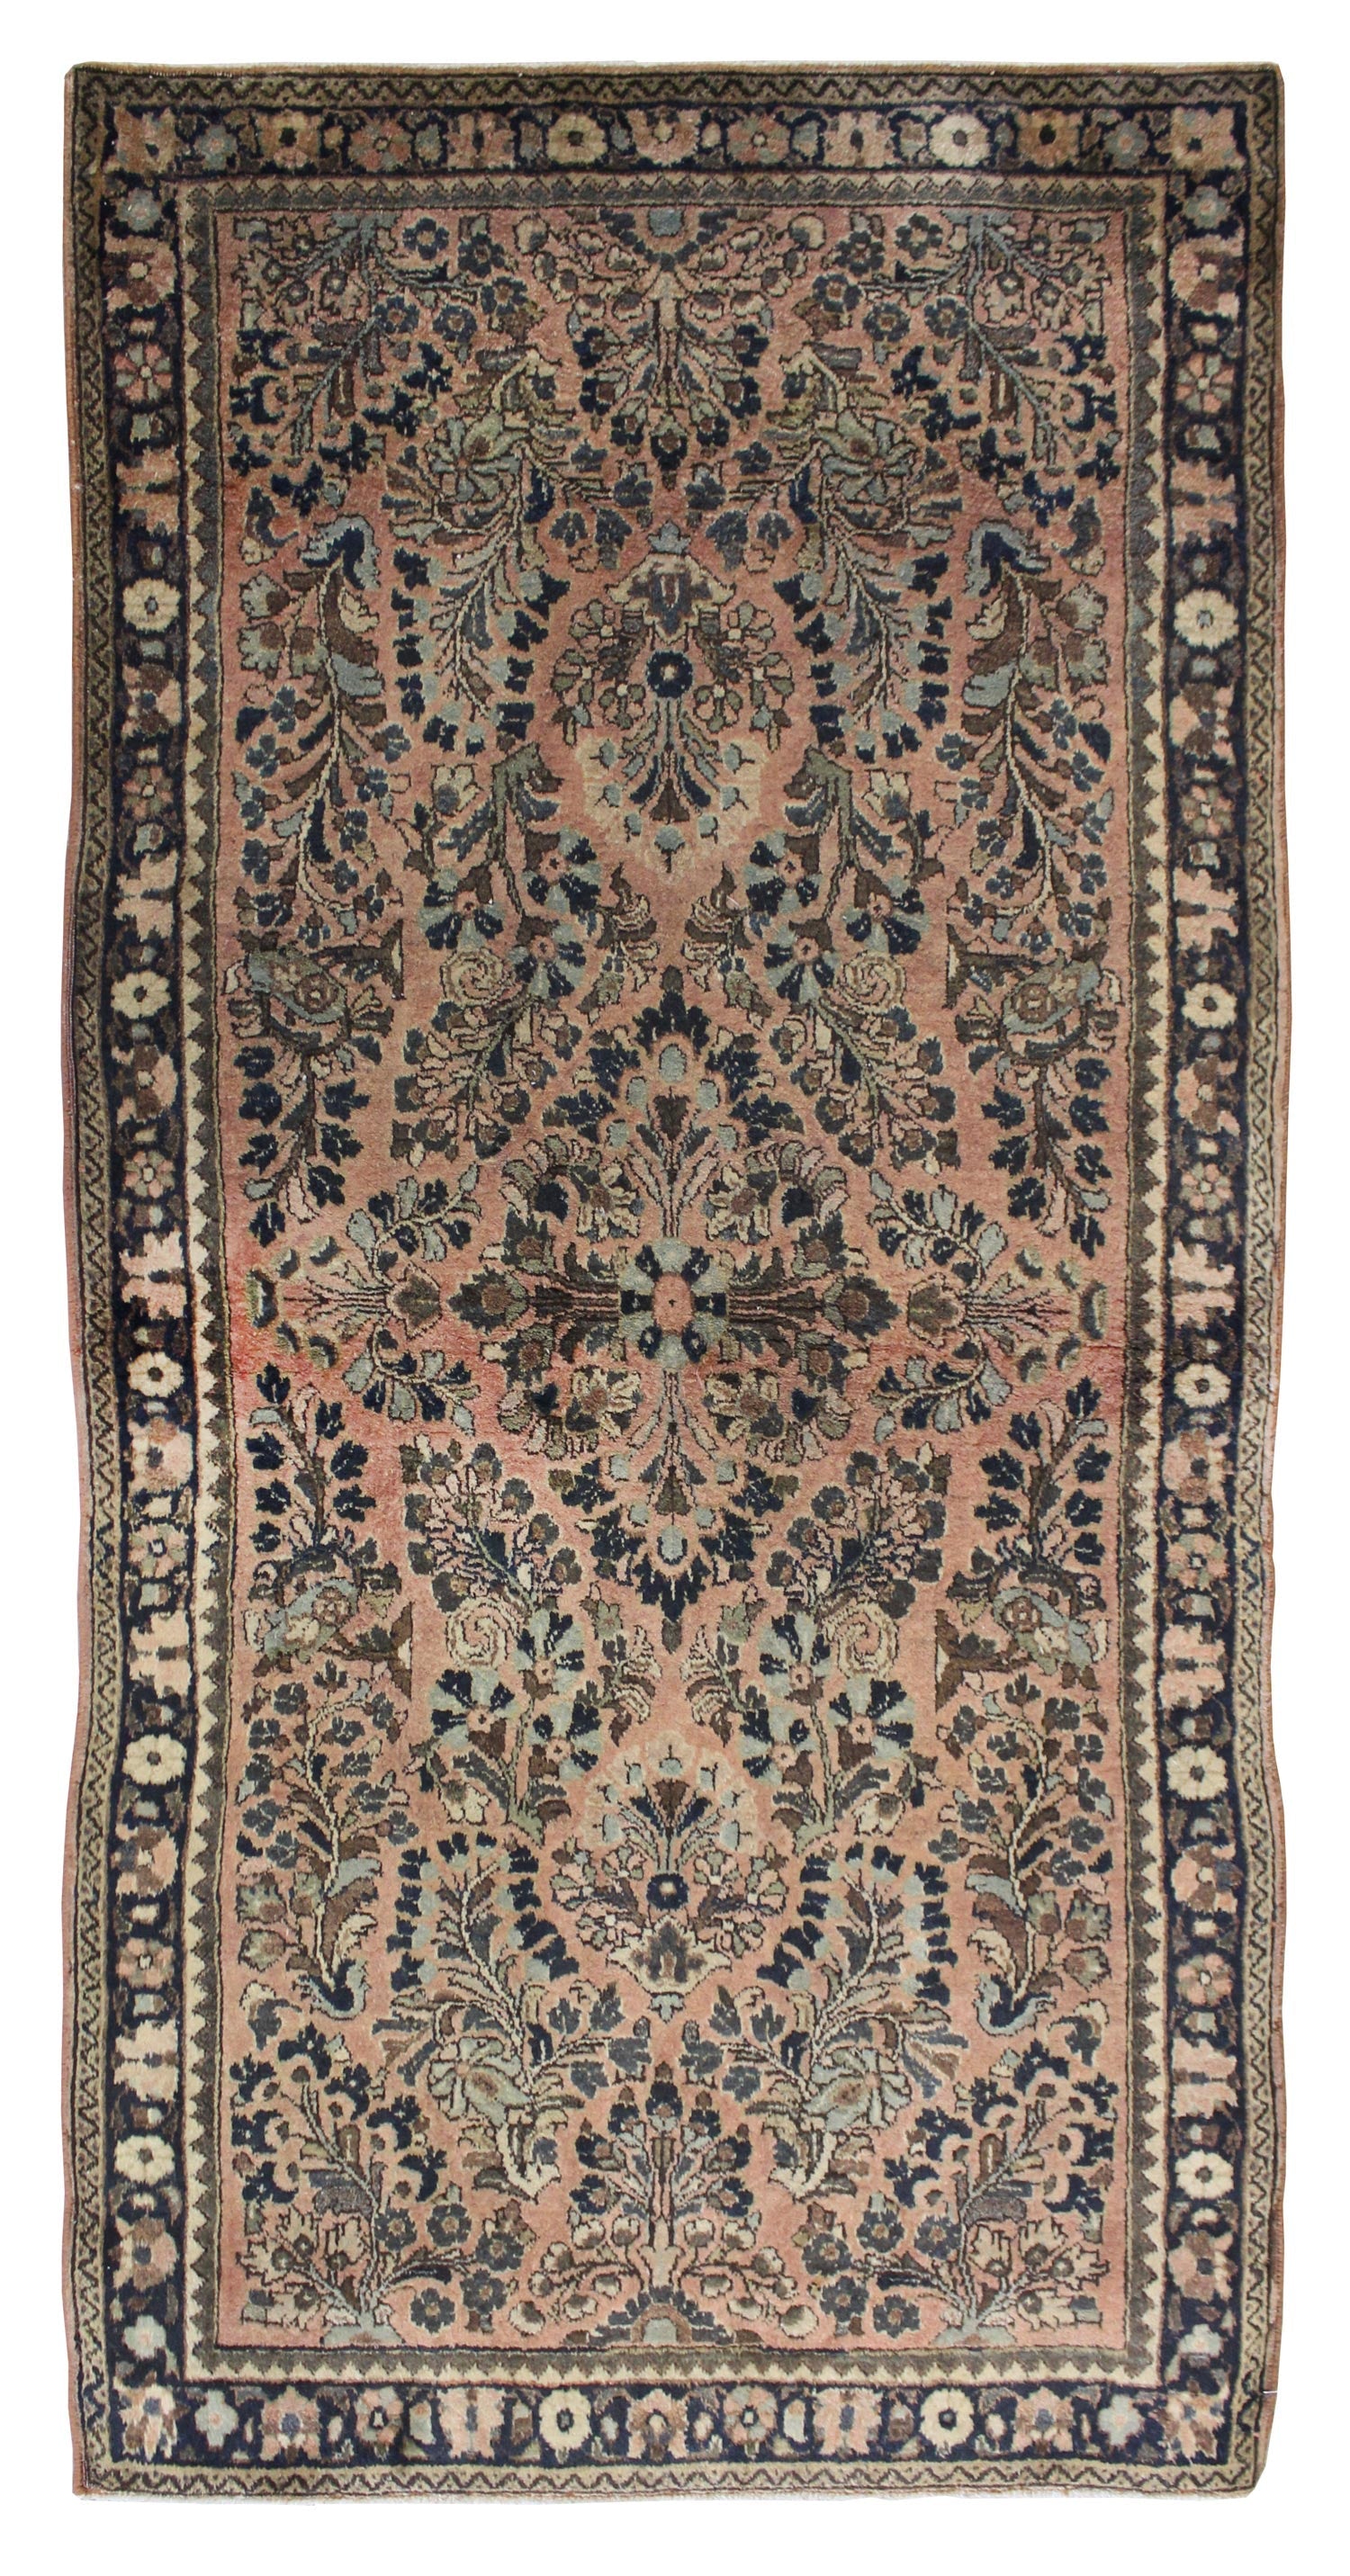 Antique Sarouk Handwoven Traditional Rug